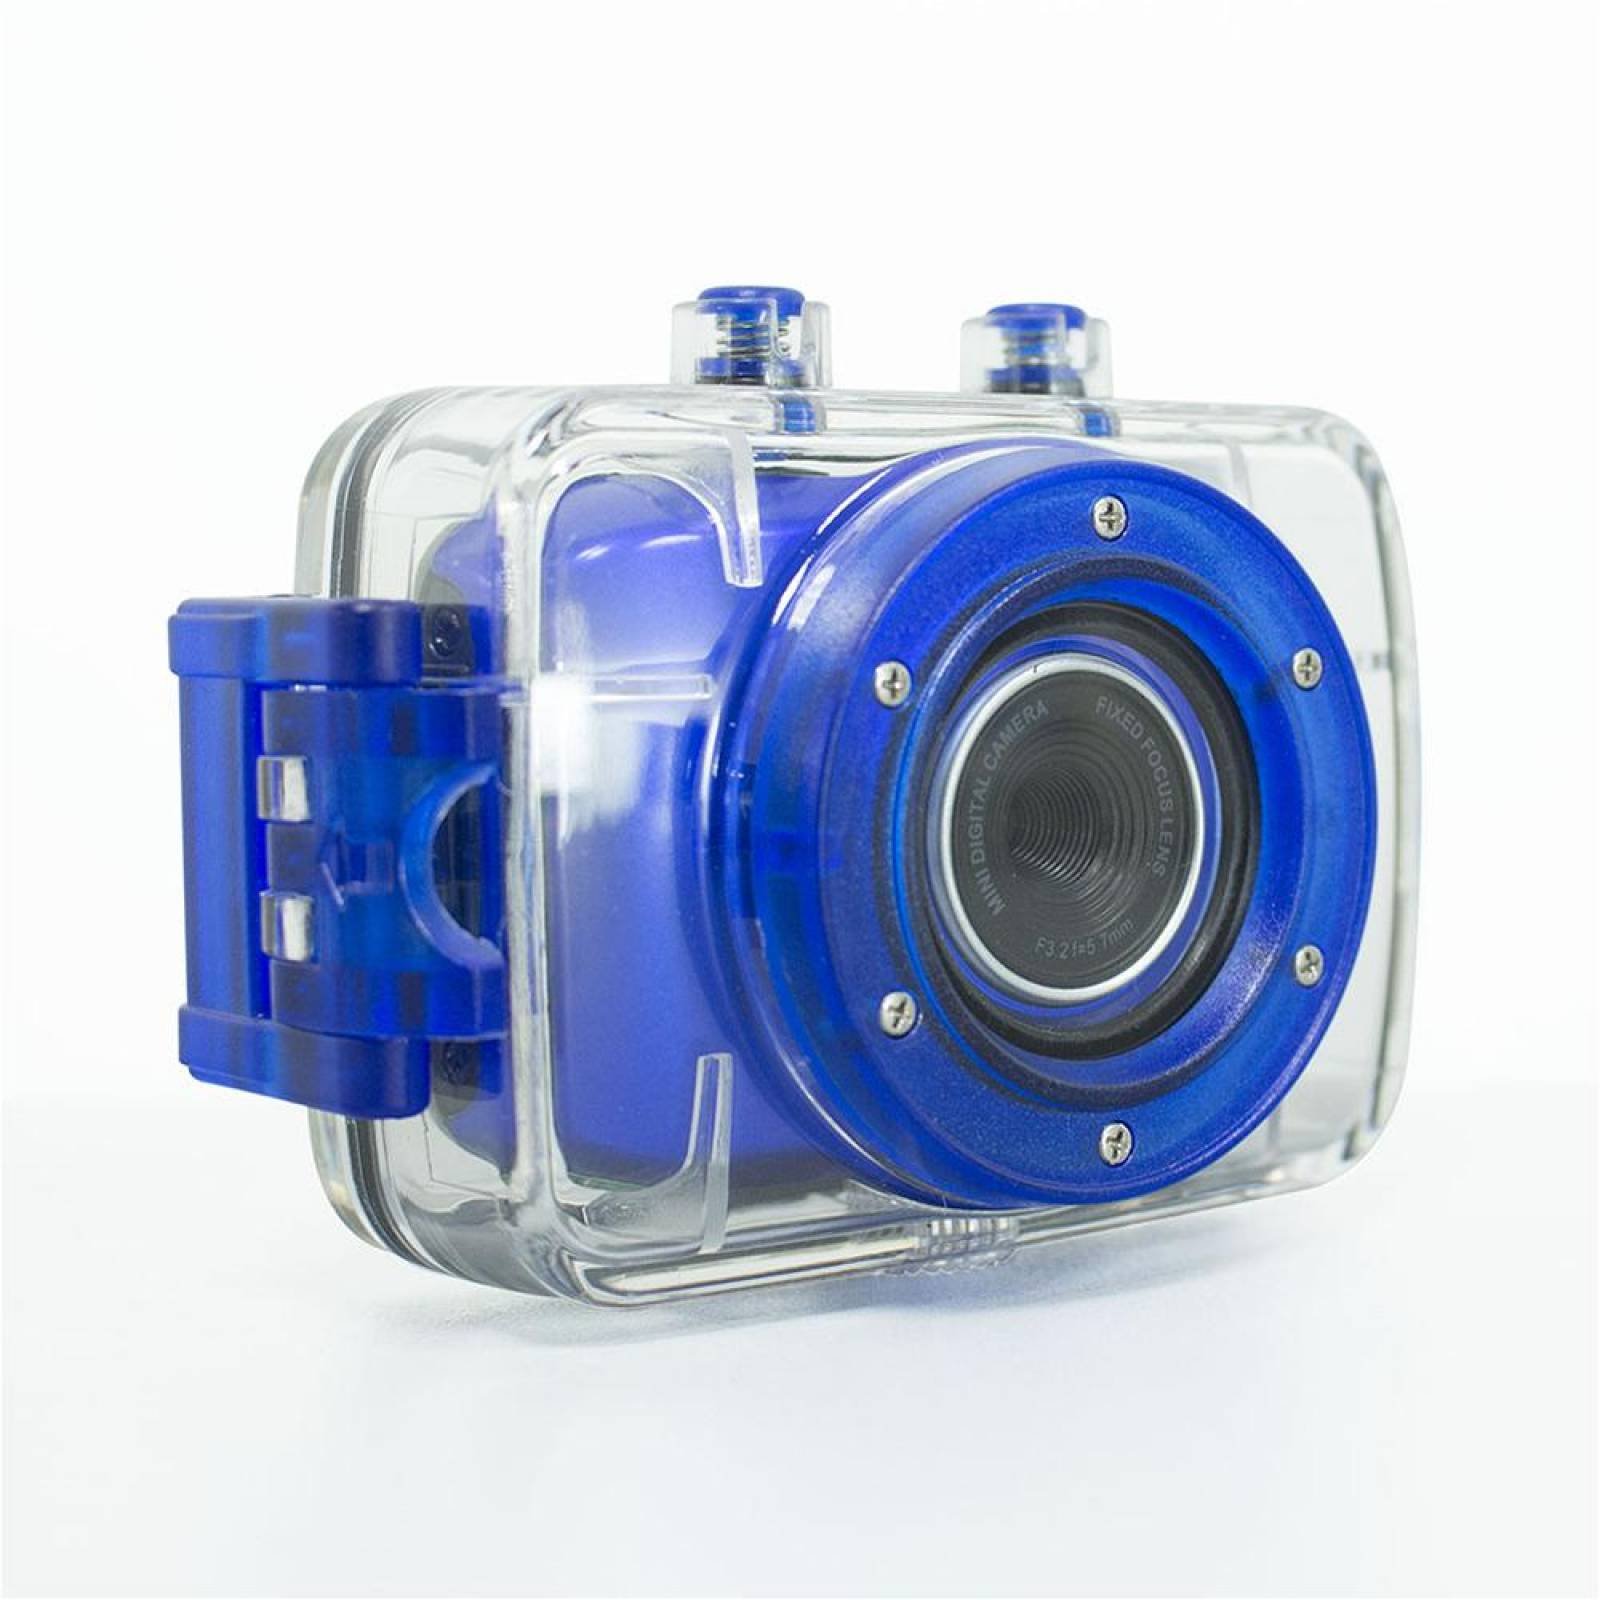 Camara 5.1 MPX Azul Vivitar DVR783HD - S002 